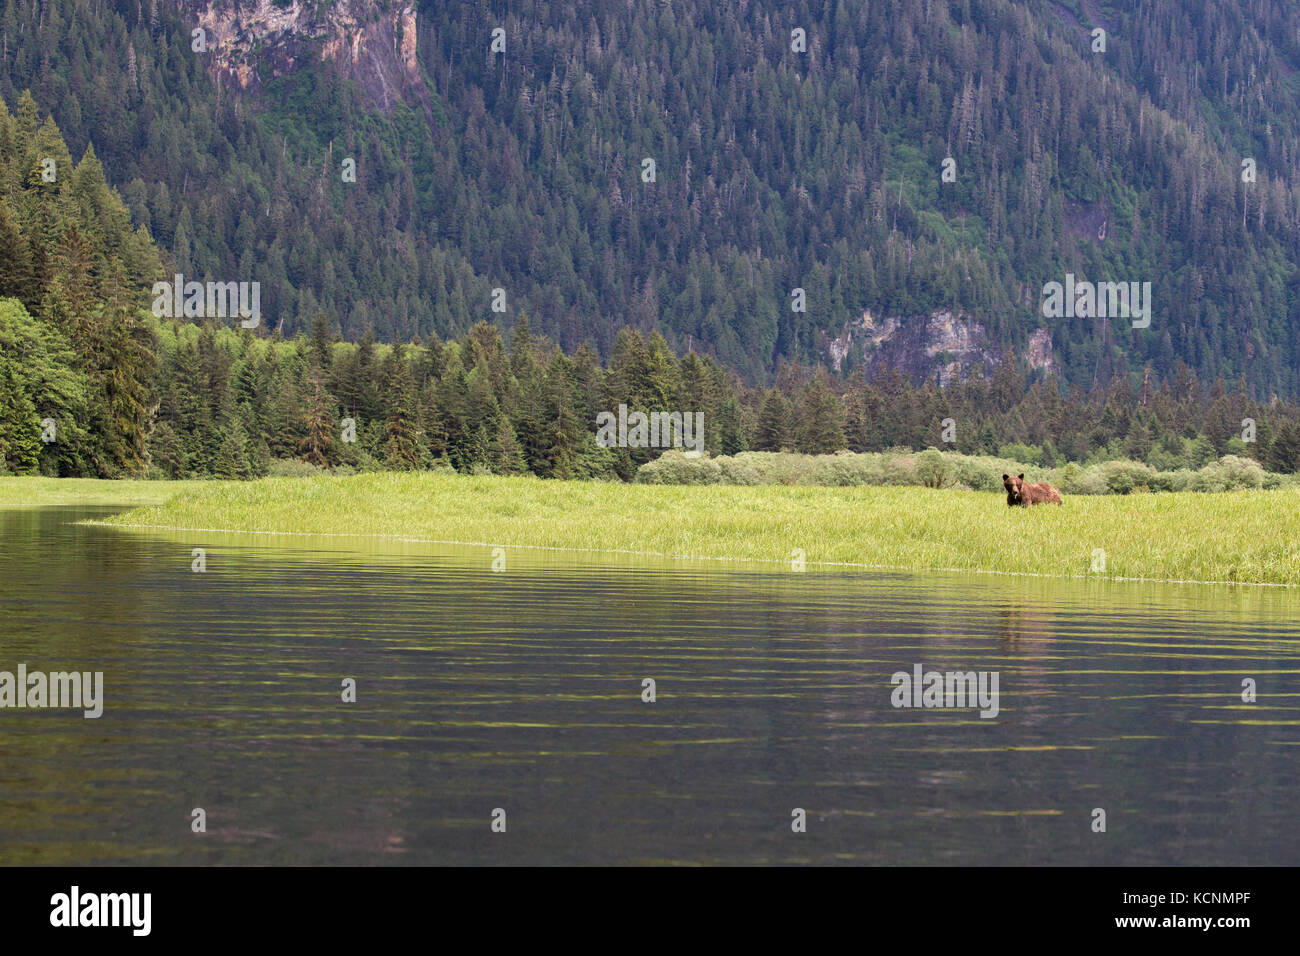 Oso grizzly (Ursus arctos), comiendo lyngbye horriblis la juncia (Carex lyngbyei), khutzeymateen Grizzly Bear sanctuary, British Columbia, Canadá Foto de stock